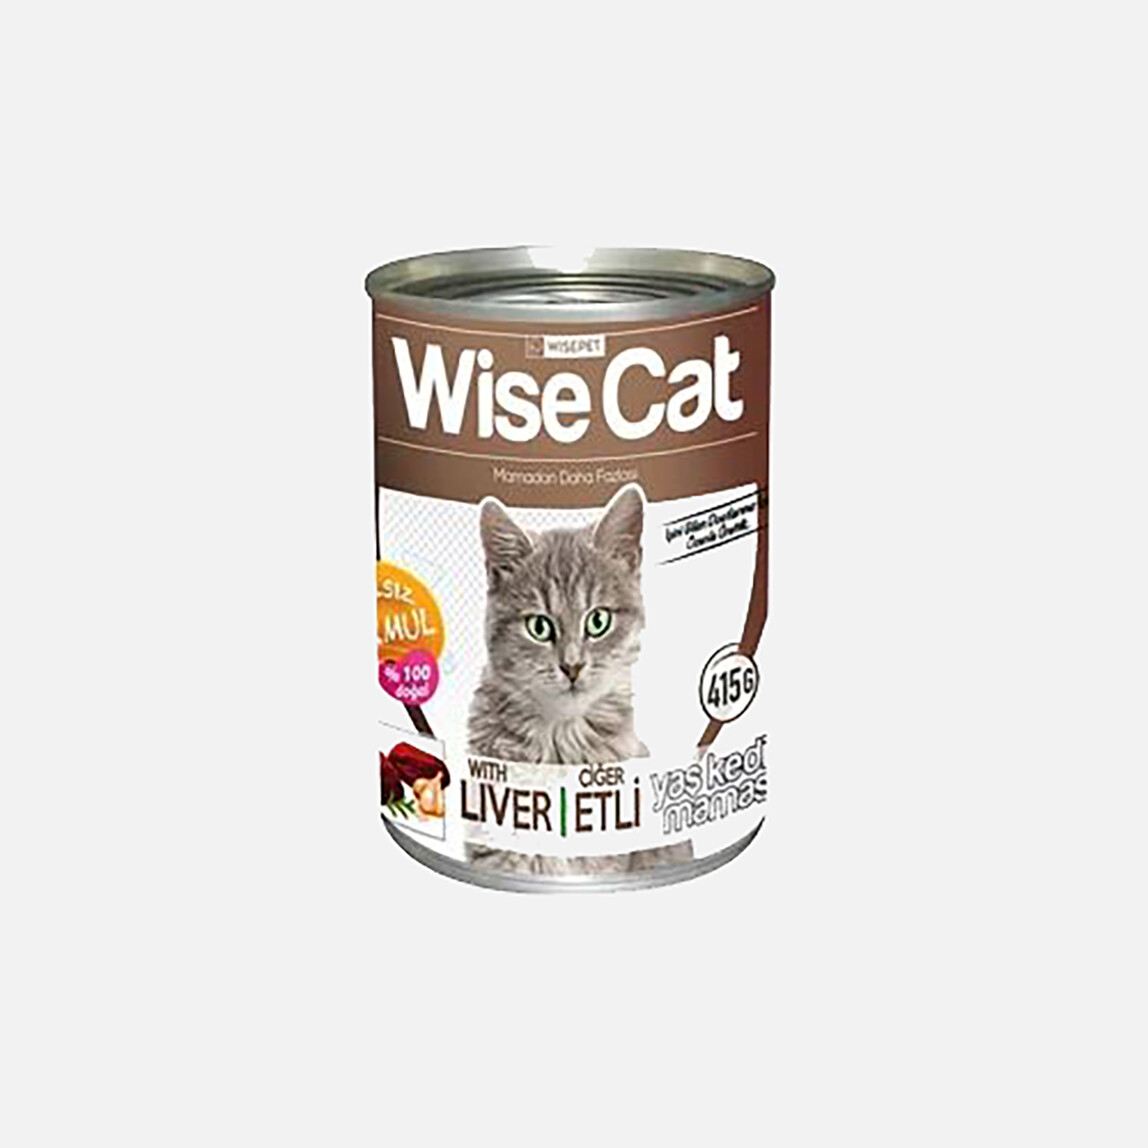    Wise Cat Ciğerli Konserve Kedi Maması 415gr 